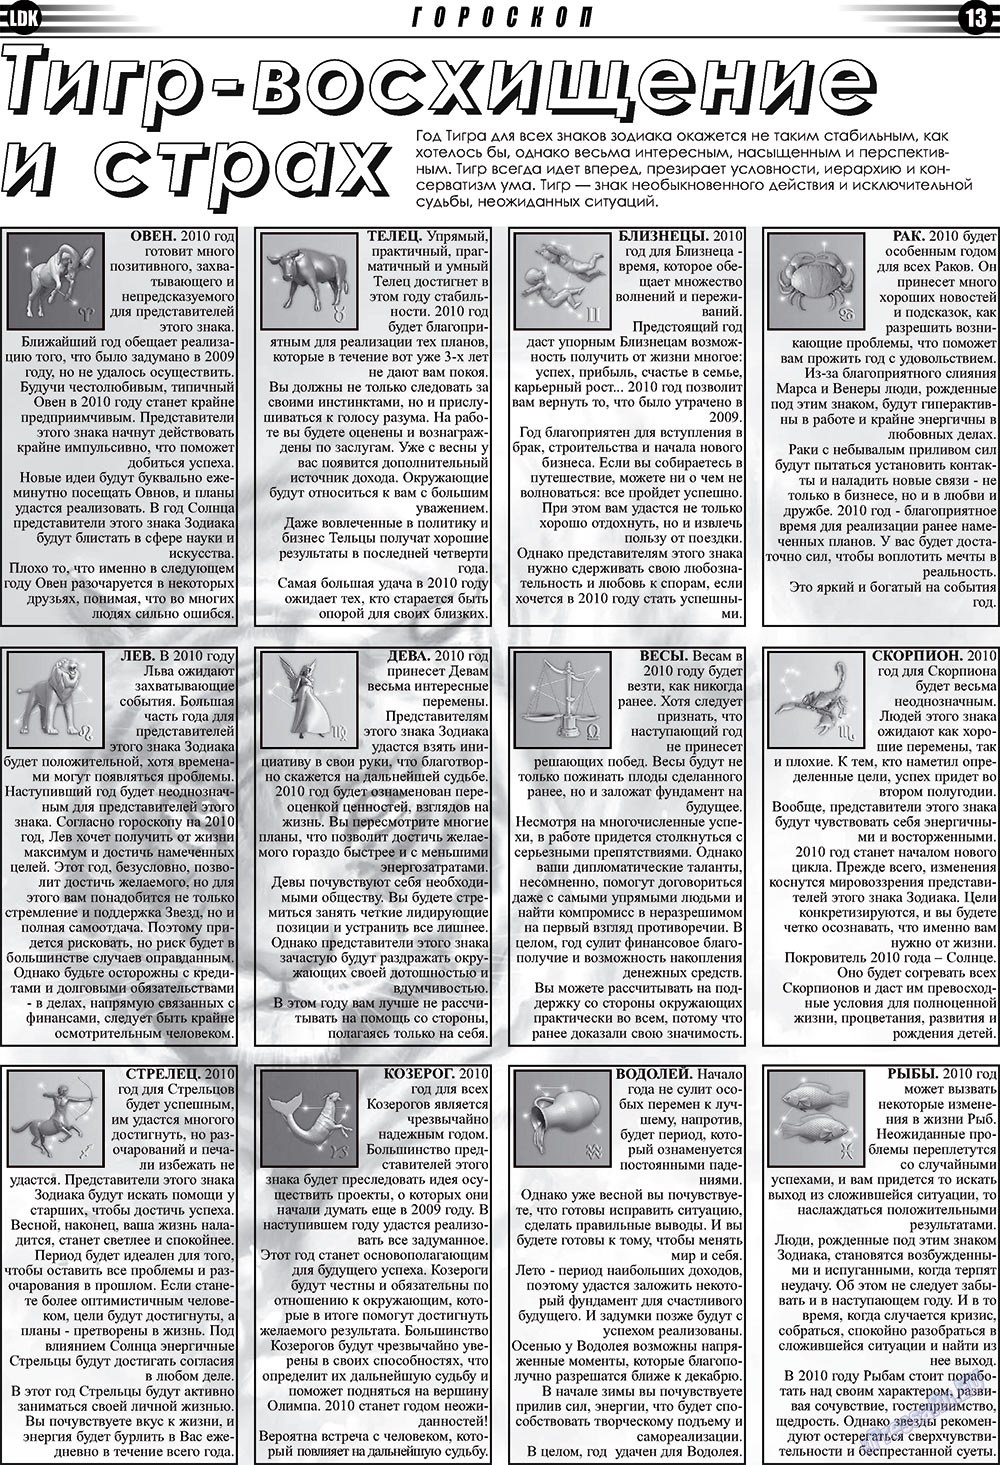 LDK по-русски, газета. 2010 №1 стр.13